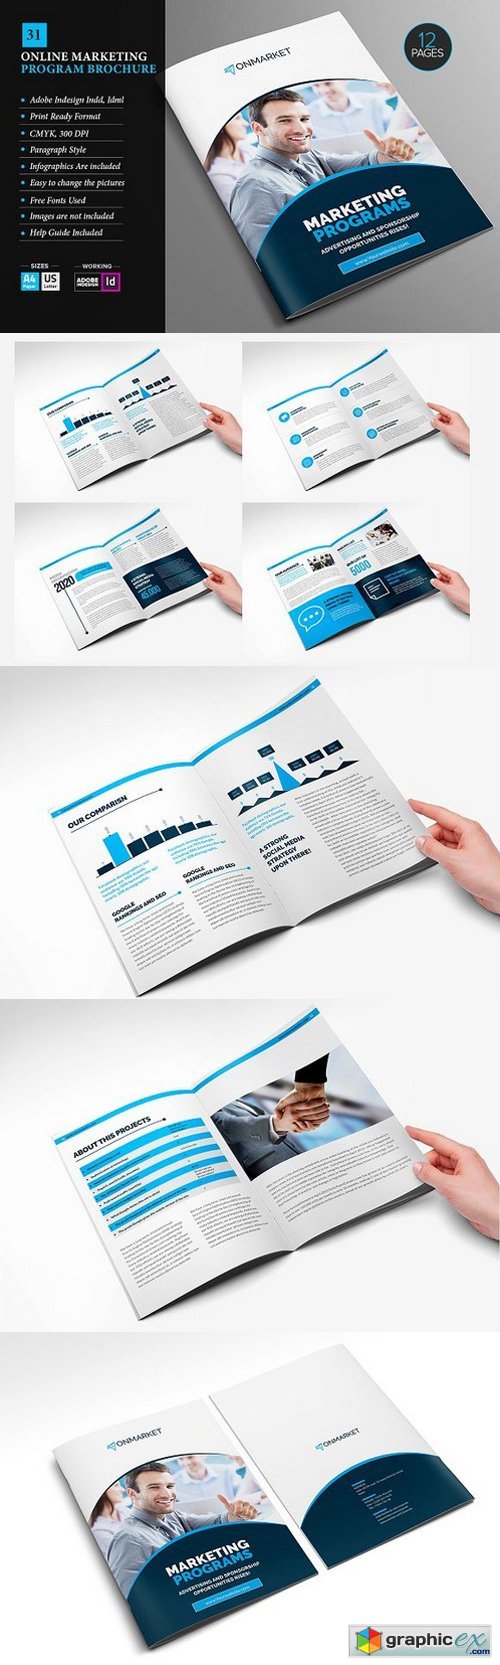 Online Marketing Program Brochure 31